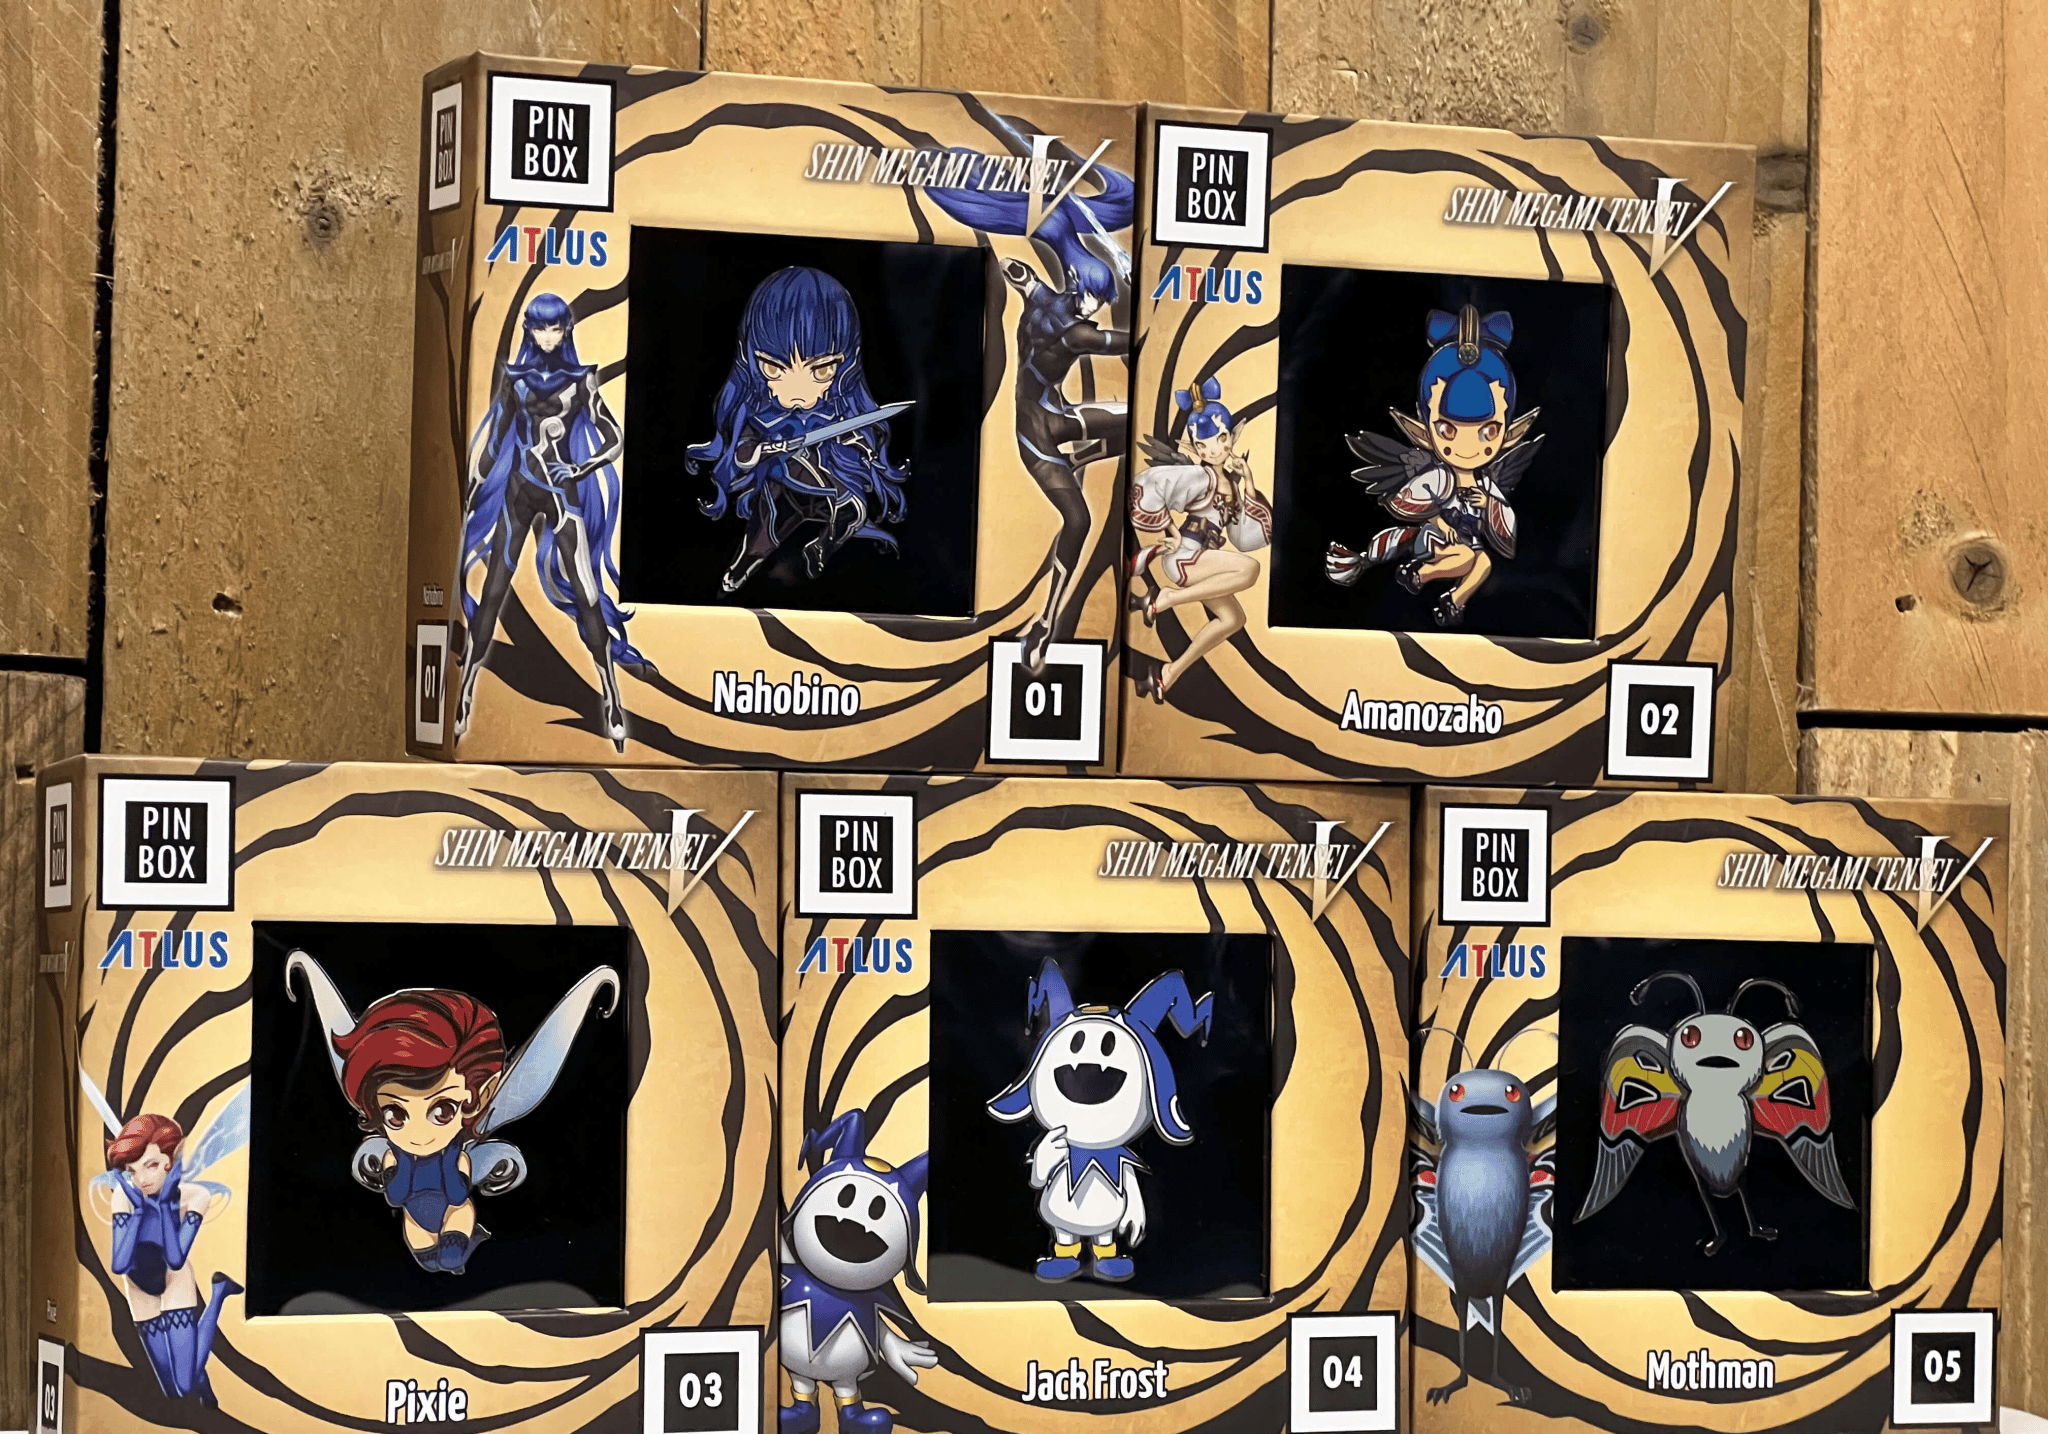 Shin Megami Tensei V Pins Revealed by Pin Box, Pre-Orders Available + June 2023 Shipments; Nahobino & Iconic Demons